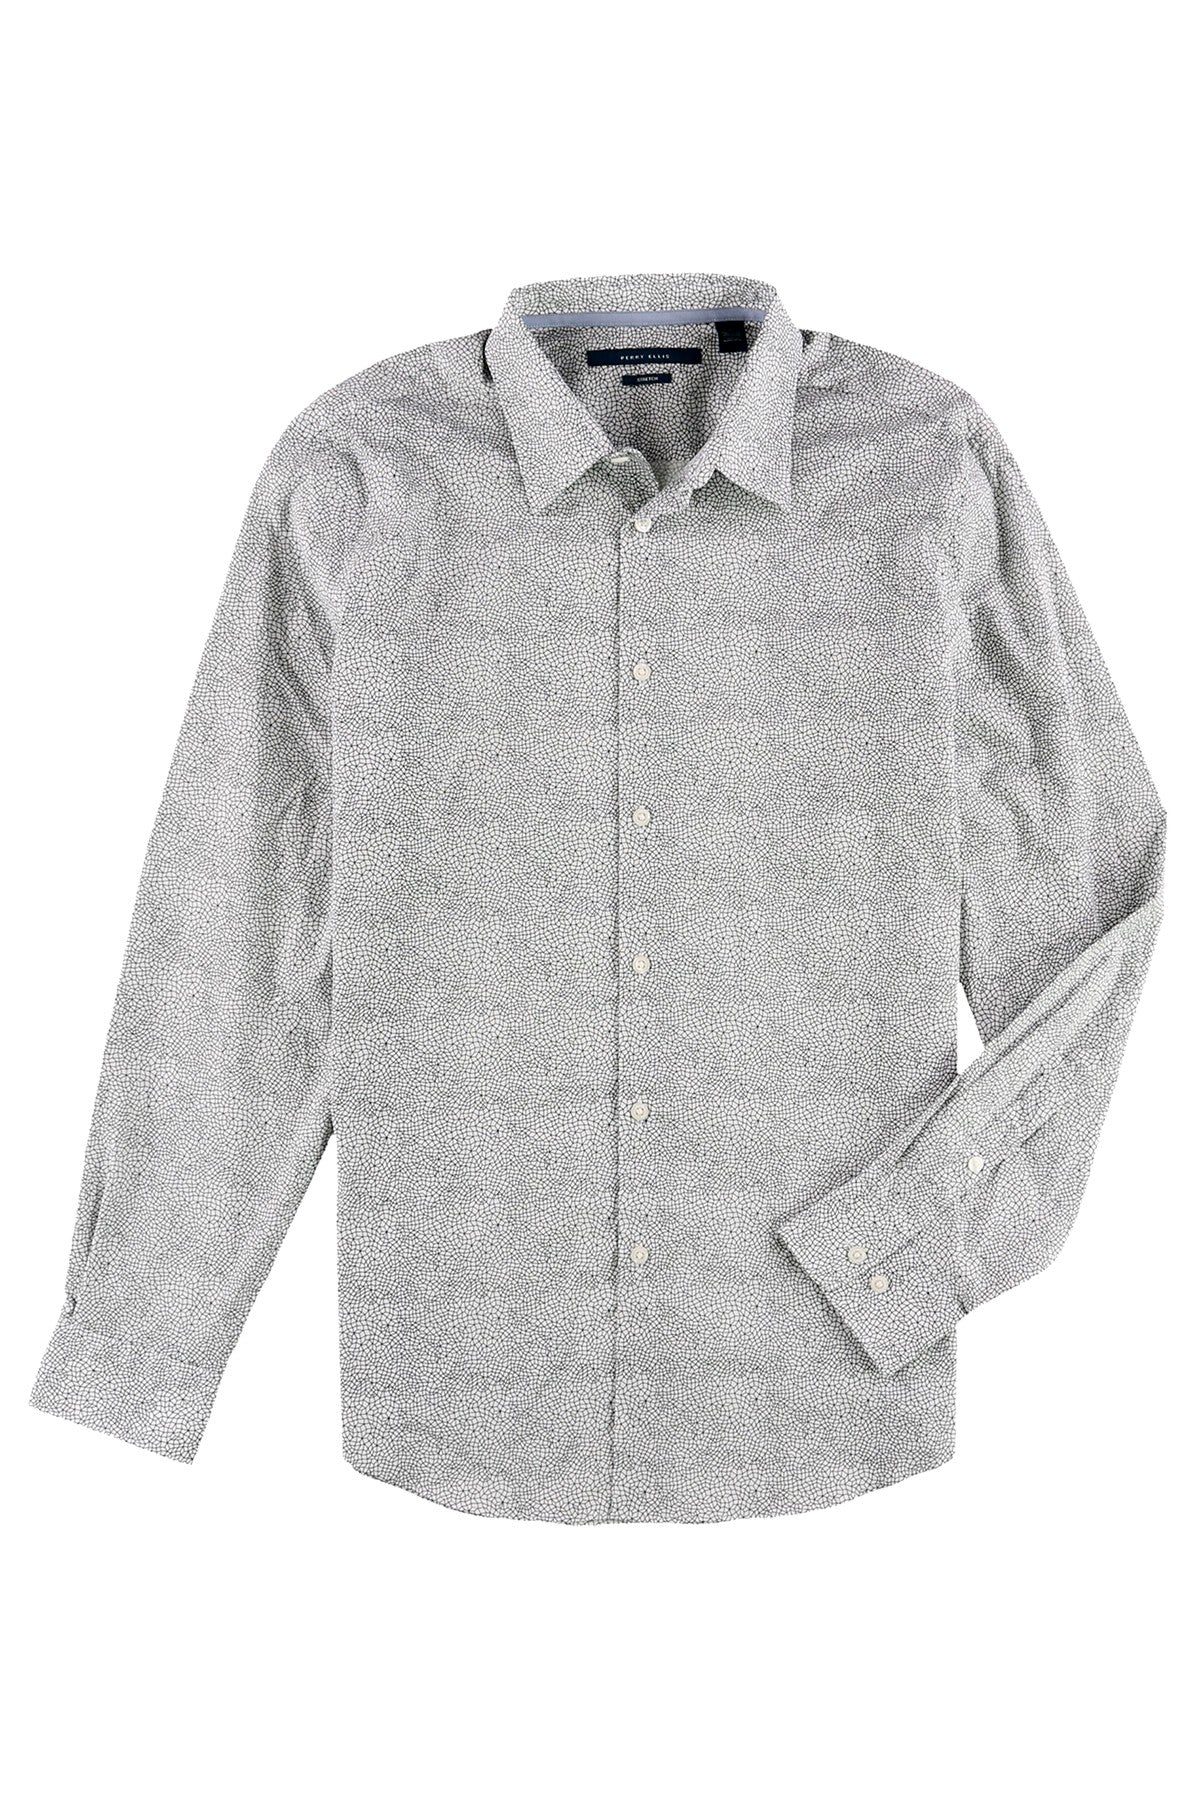 Perry Ellis Bright White Geometric Button Up Shirt